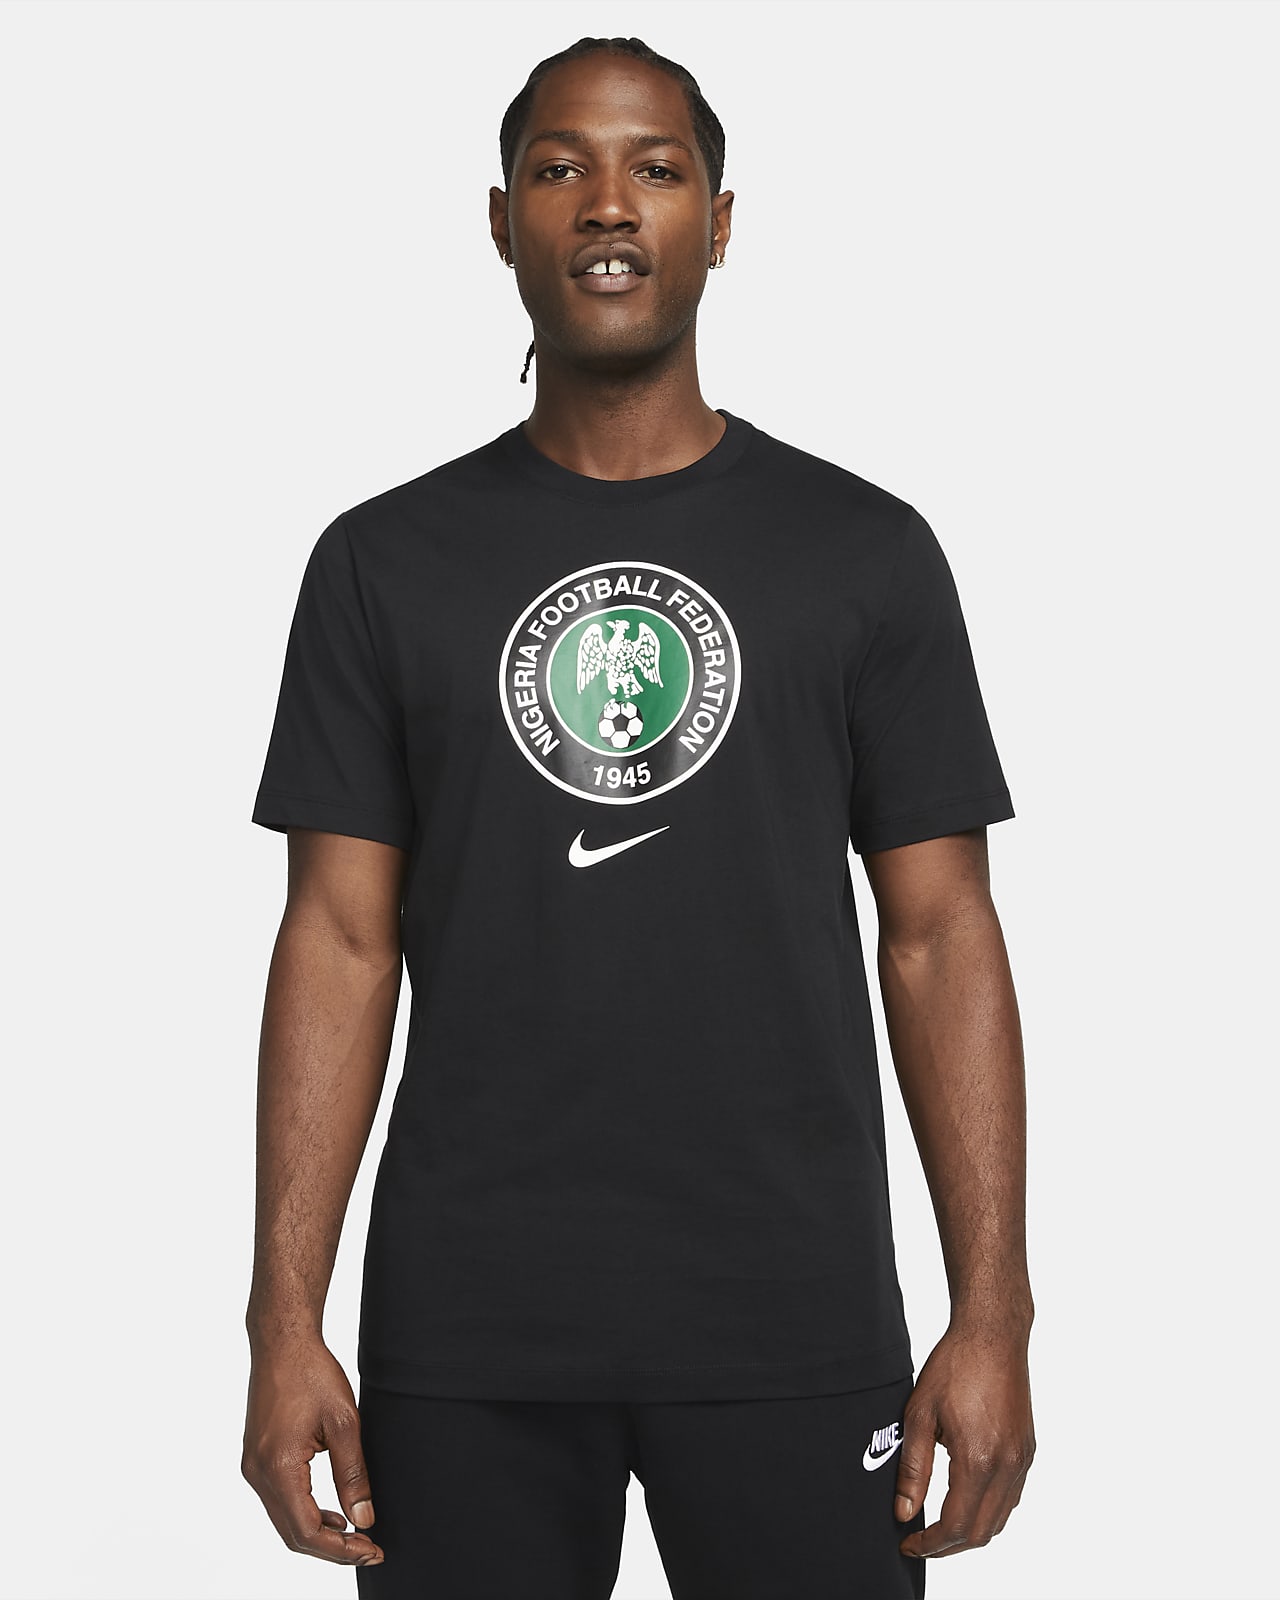 Nigeria Men's Football T-Shirt